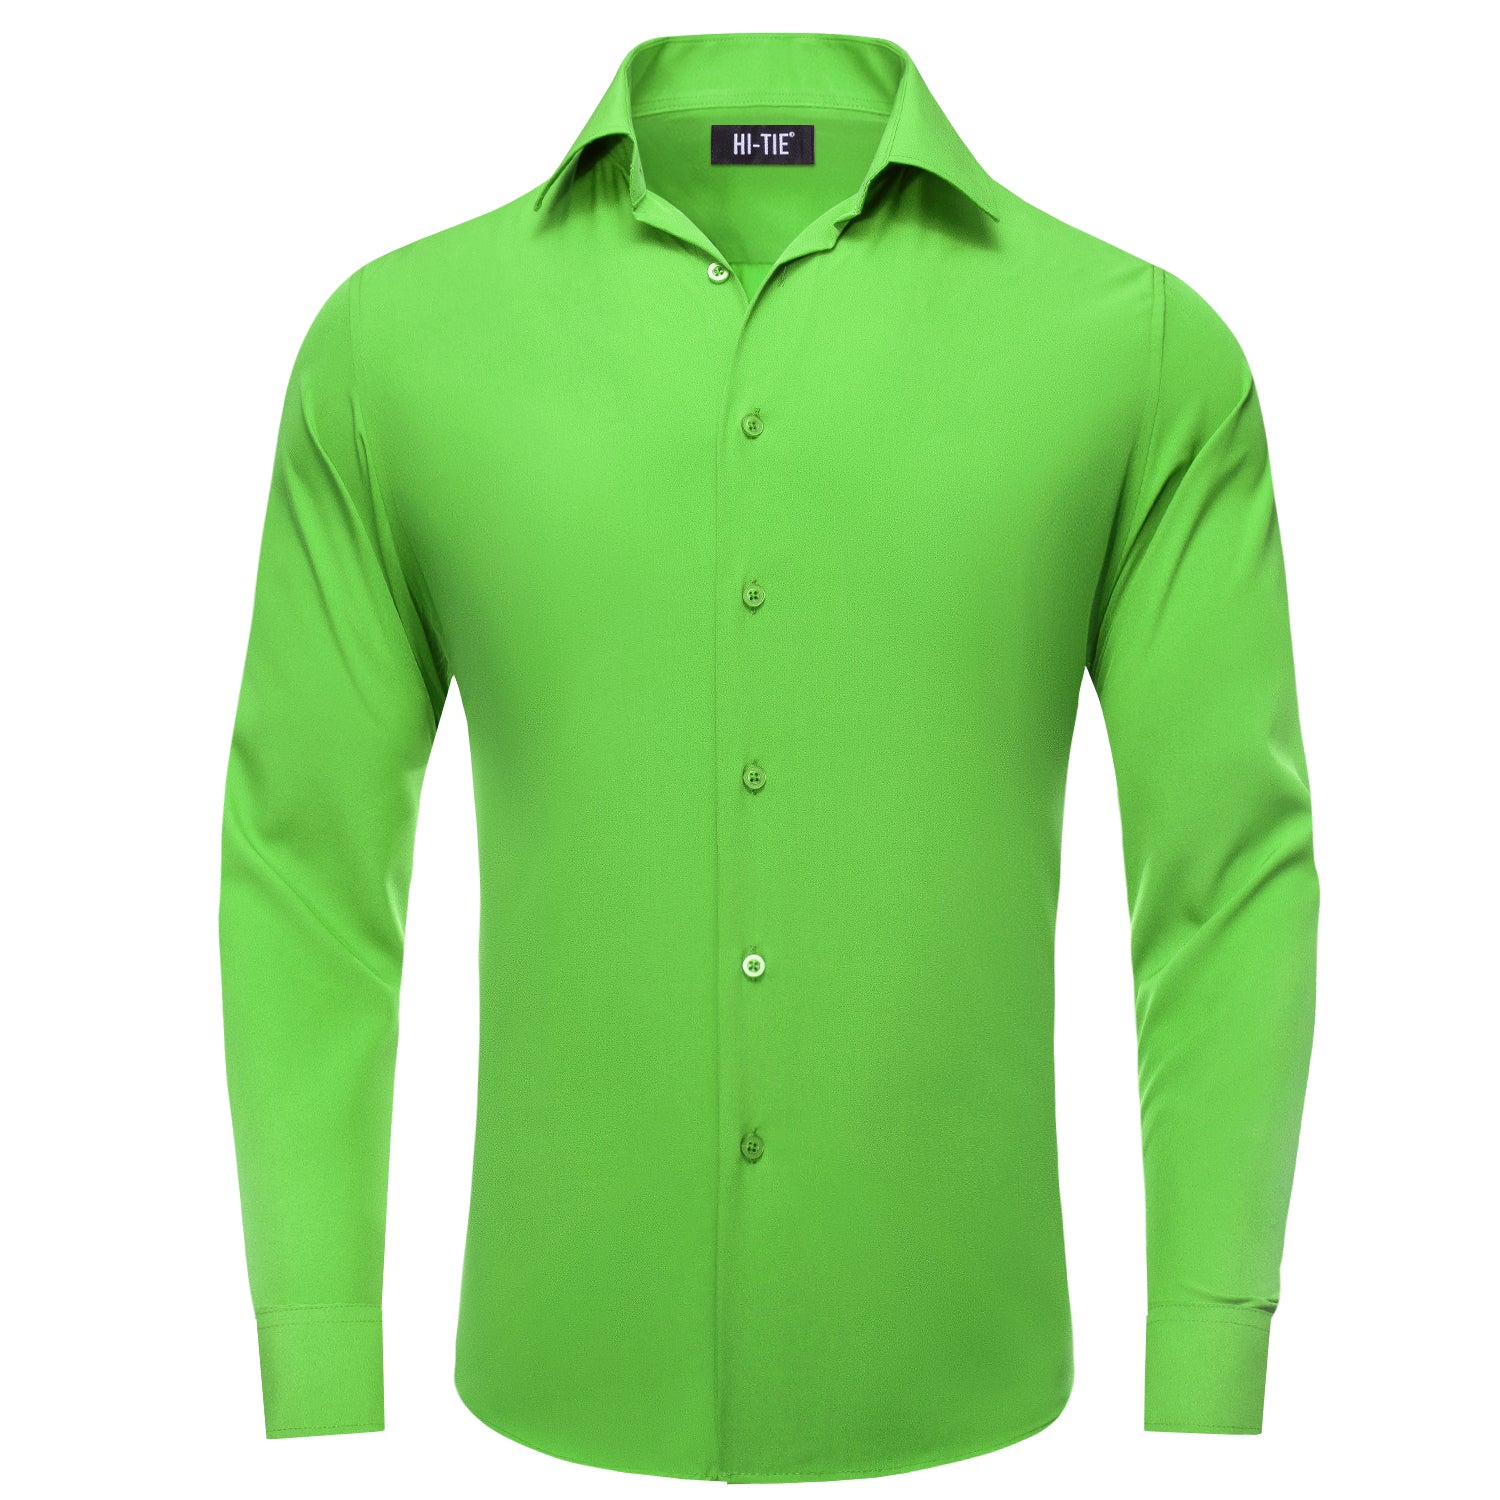  Green Solid Casual Men's Dress Shirt 